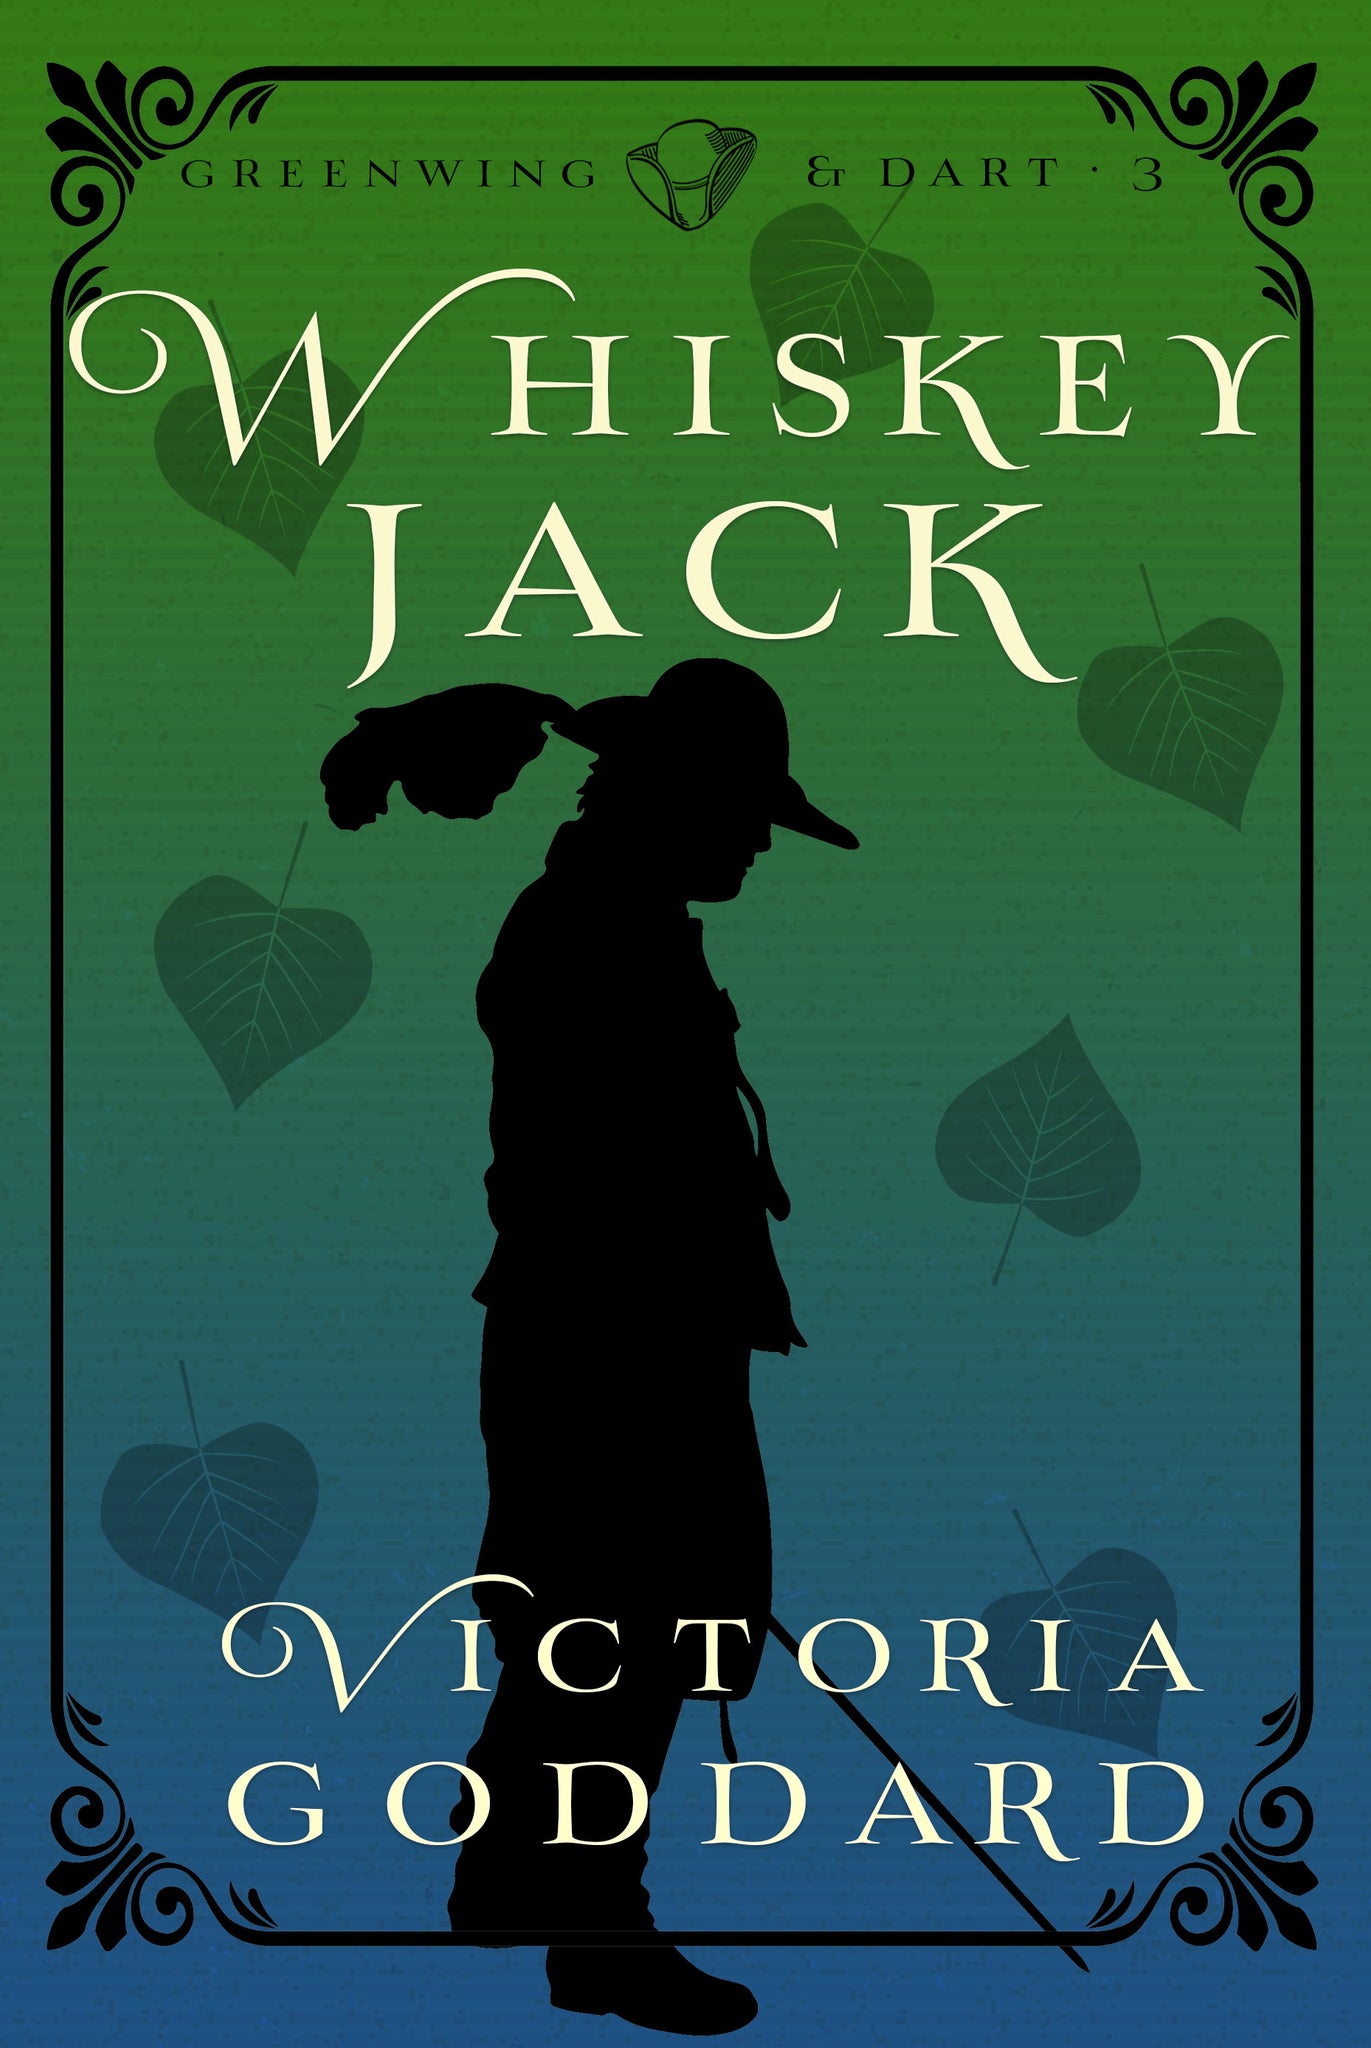 Greenwing & Dart 3: Whiskeyjack